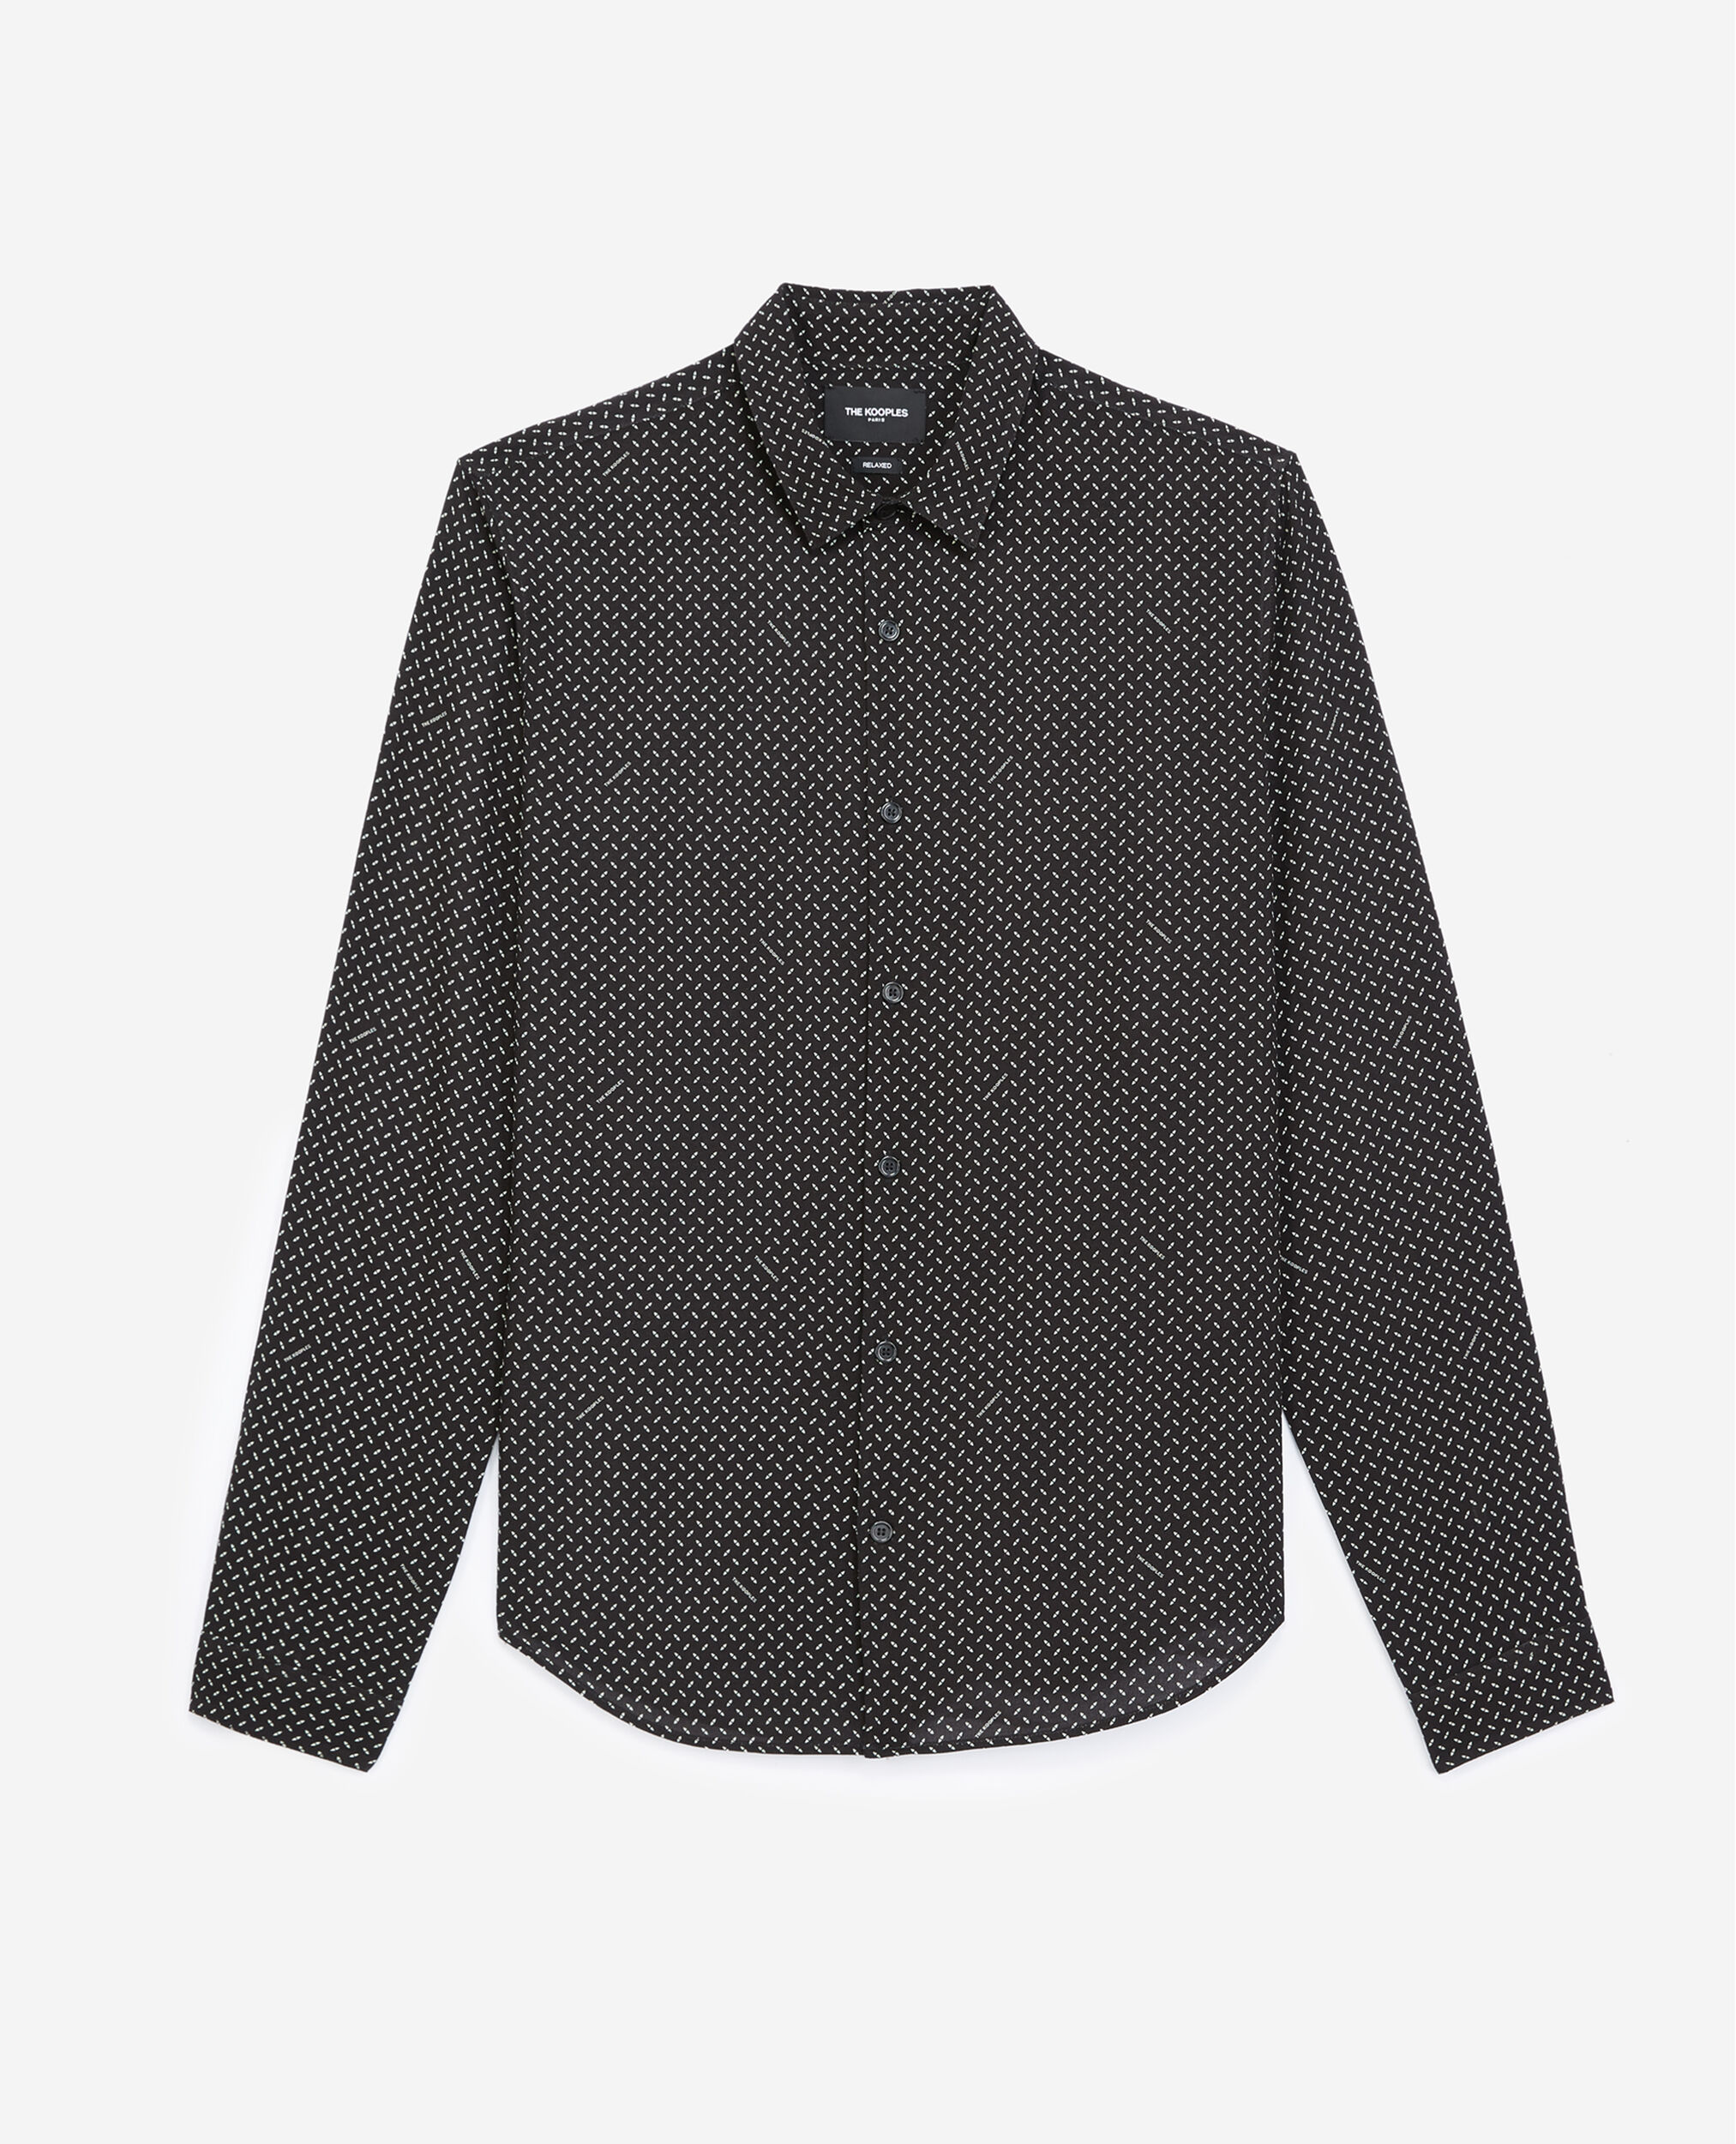 Black shirt with white motif, BLACK WHITE, hi-res image number null